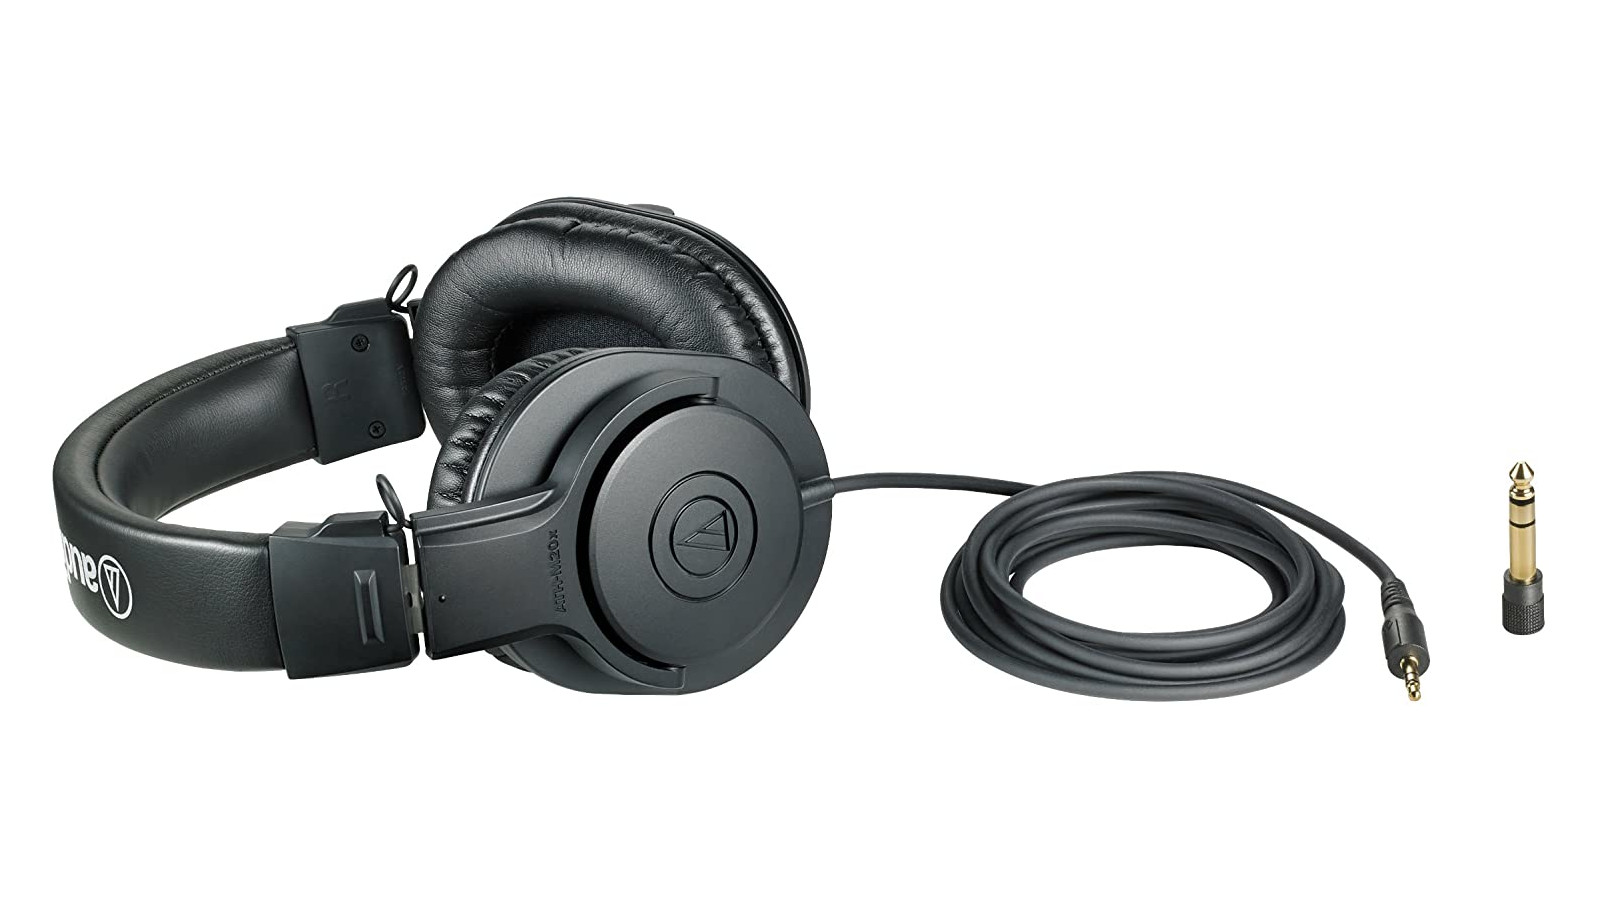 The audio-technica ath-m20x over-ear headphones in black